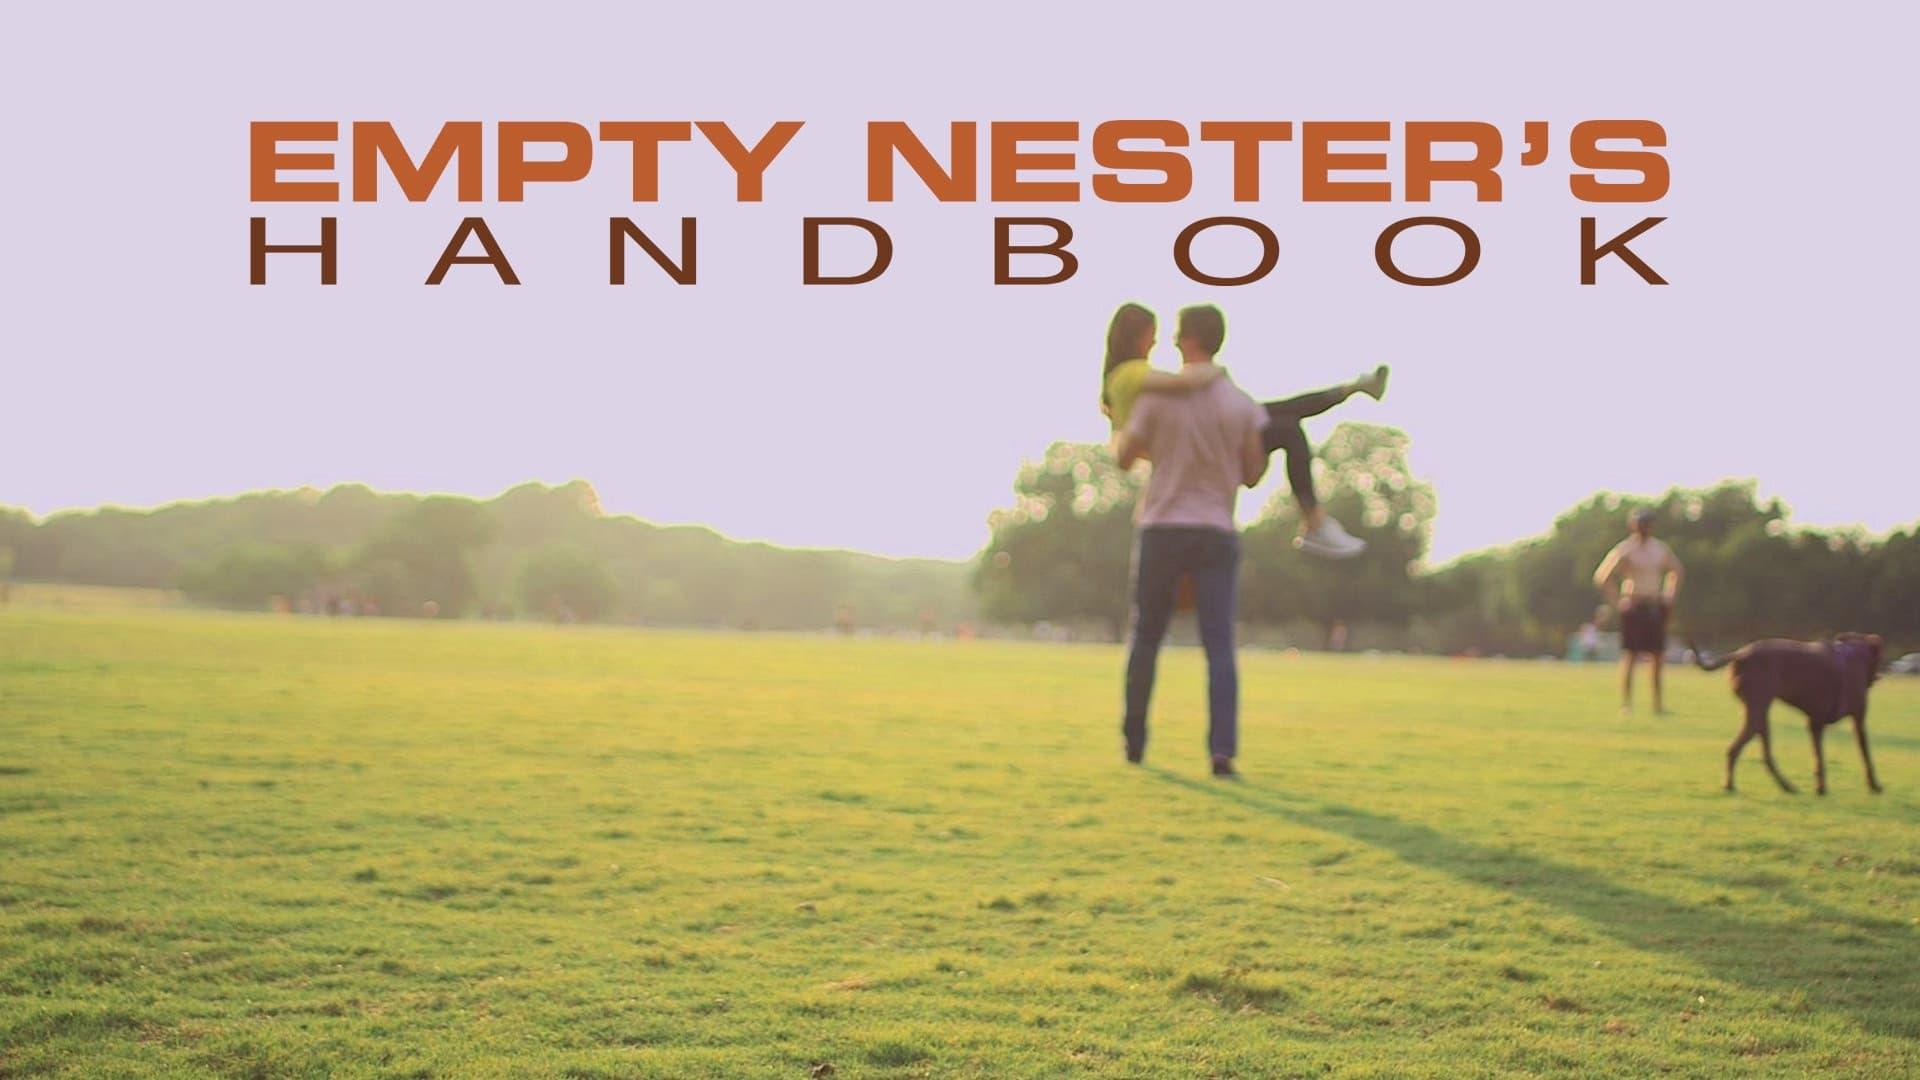 Empty Nester's Handbook backdrop